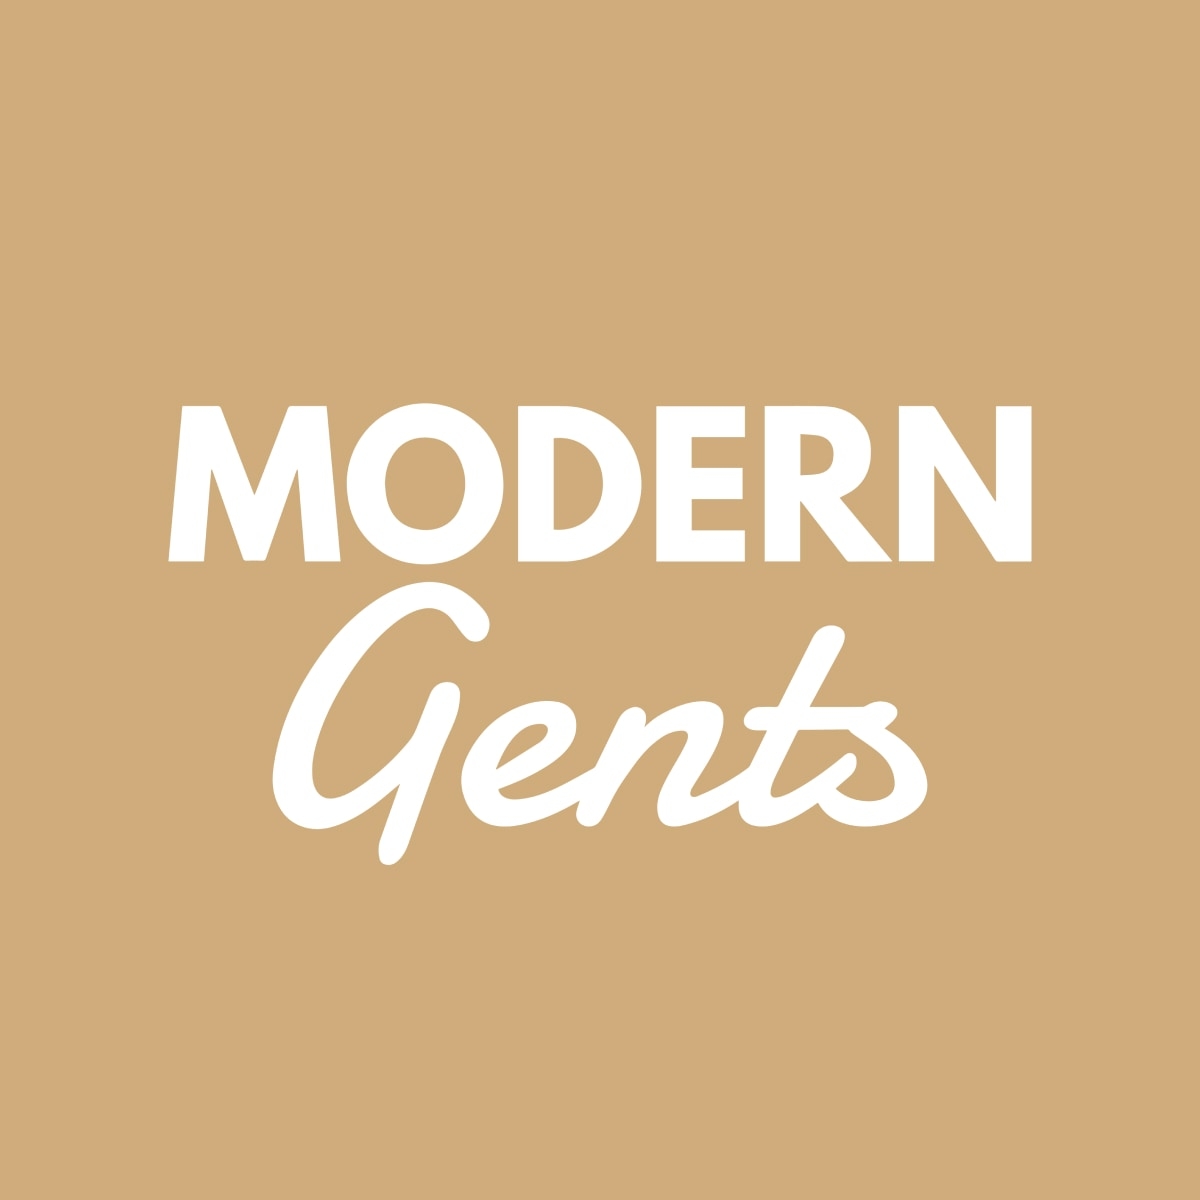 Modern Gents Trading